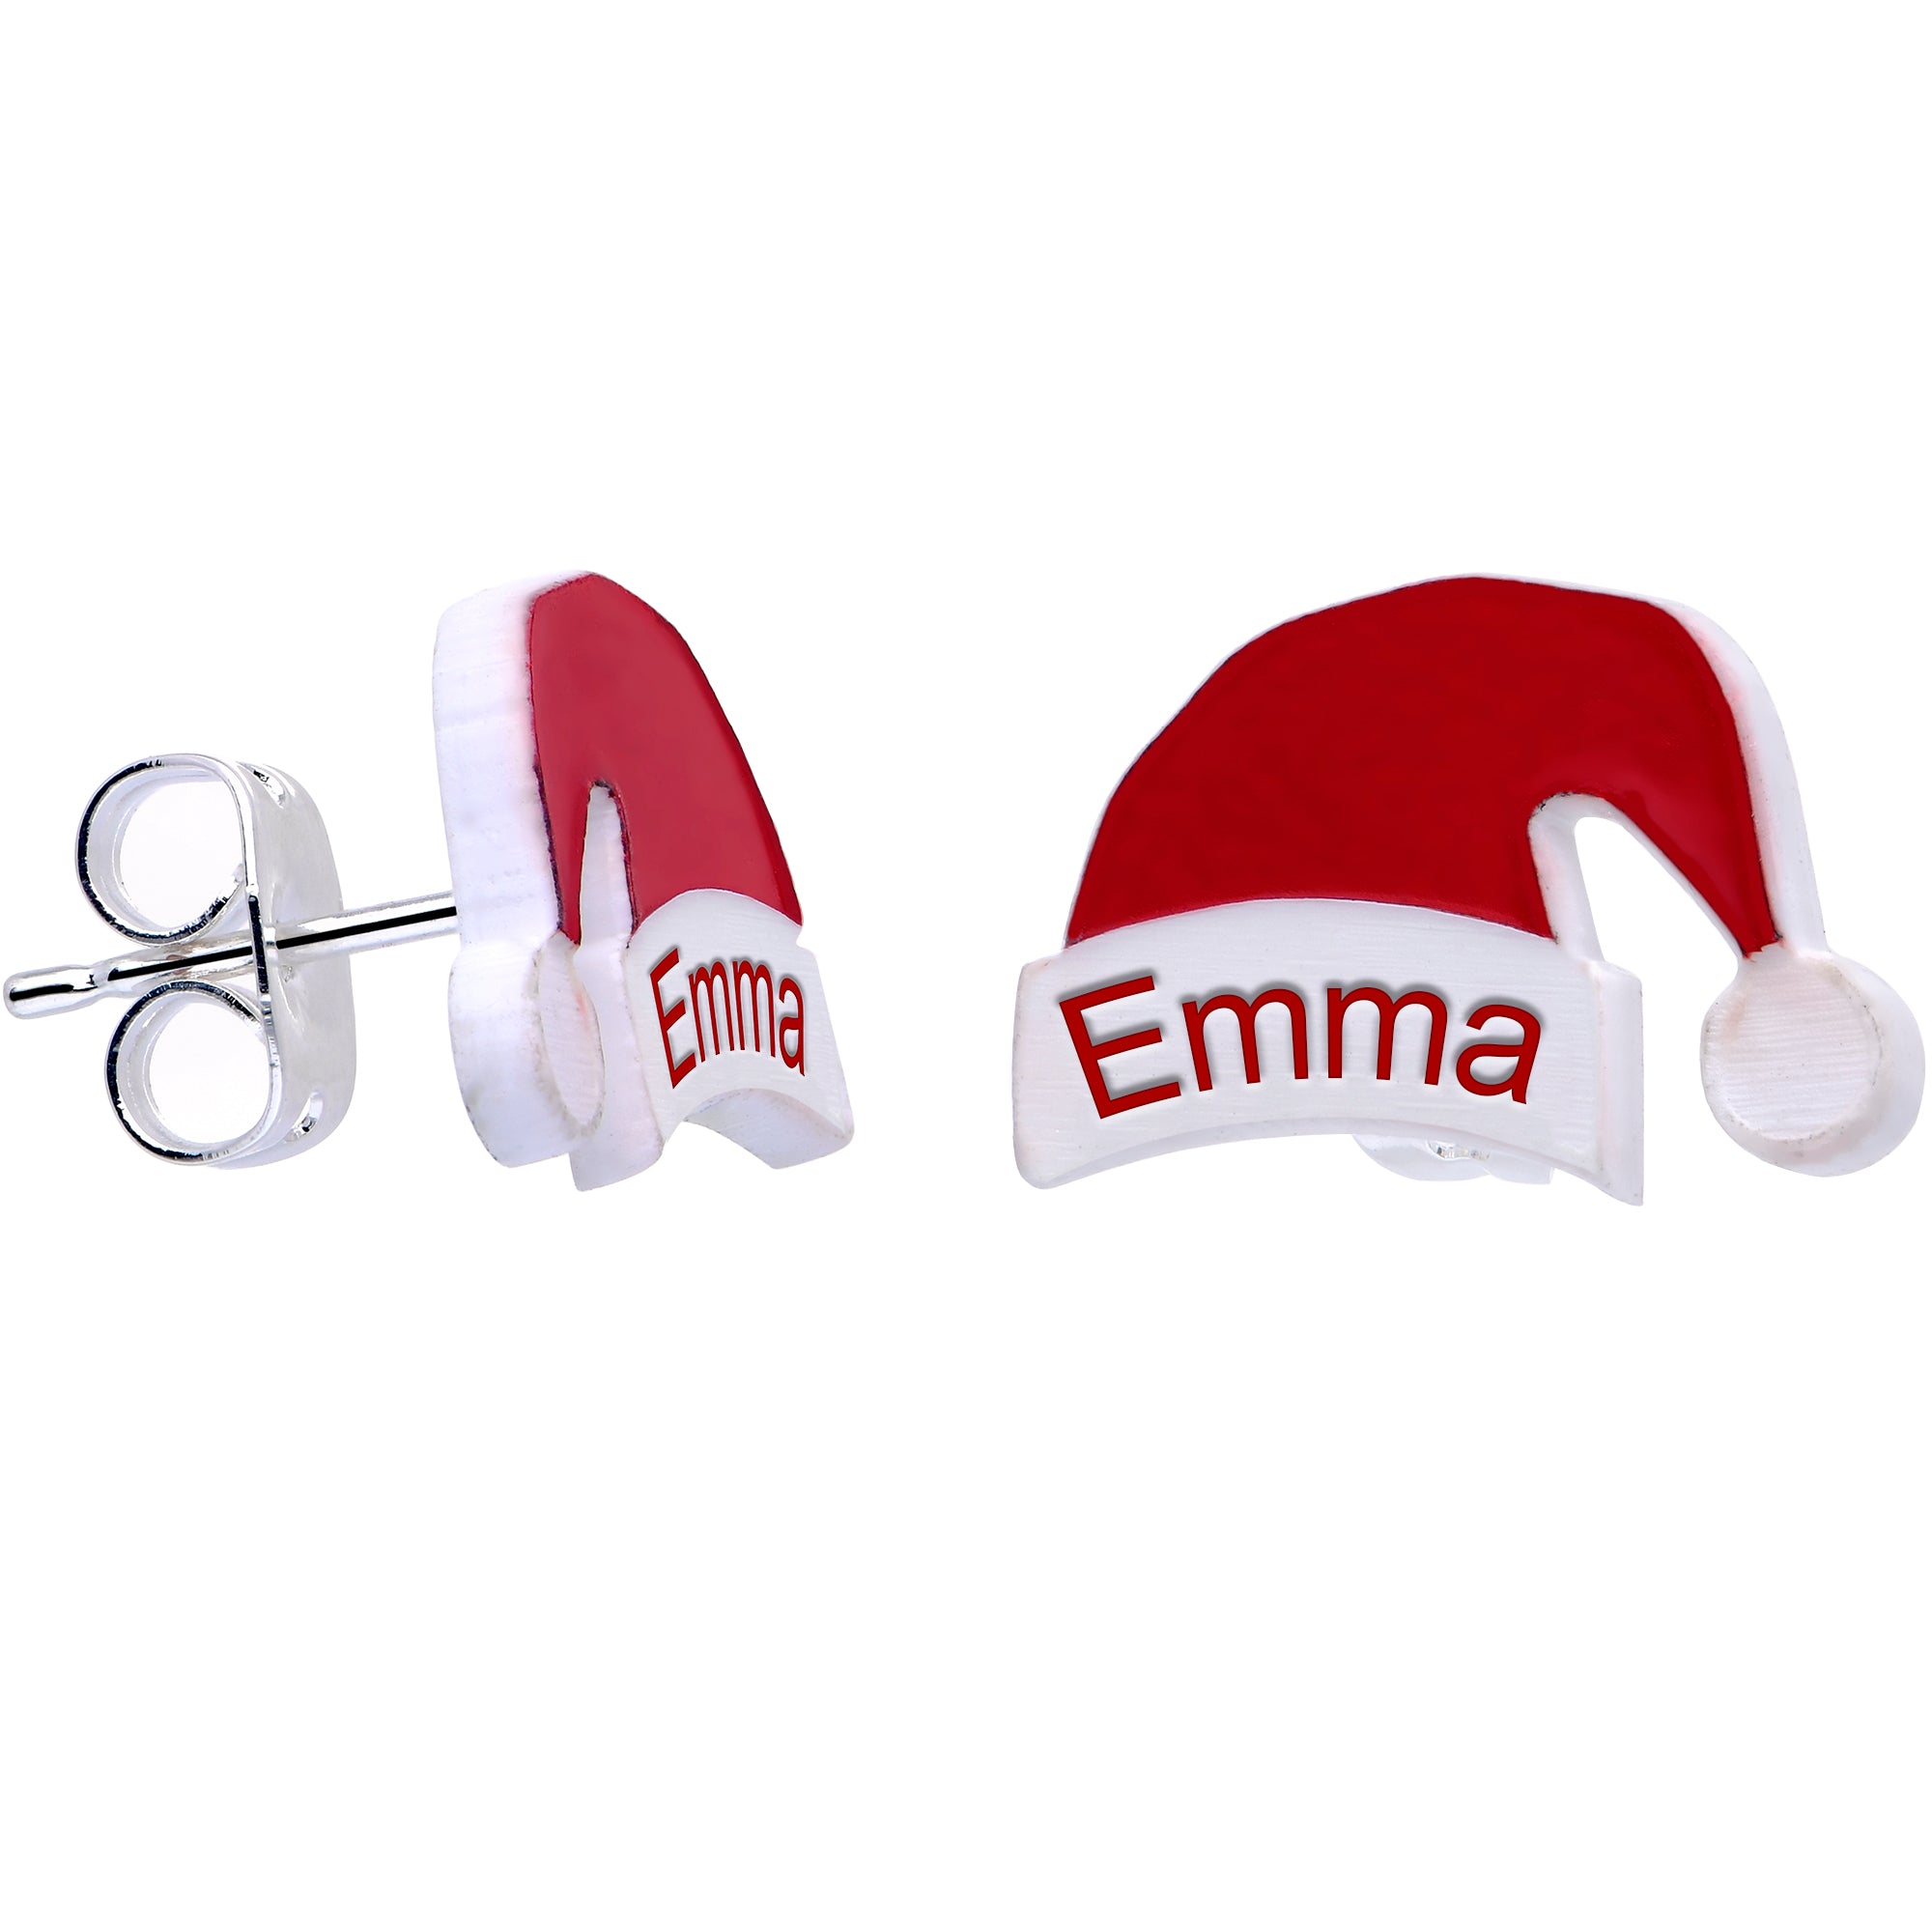 Custom Santa Hat Personalized Stud Earrings